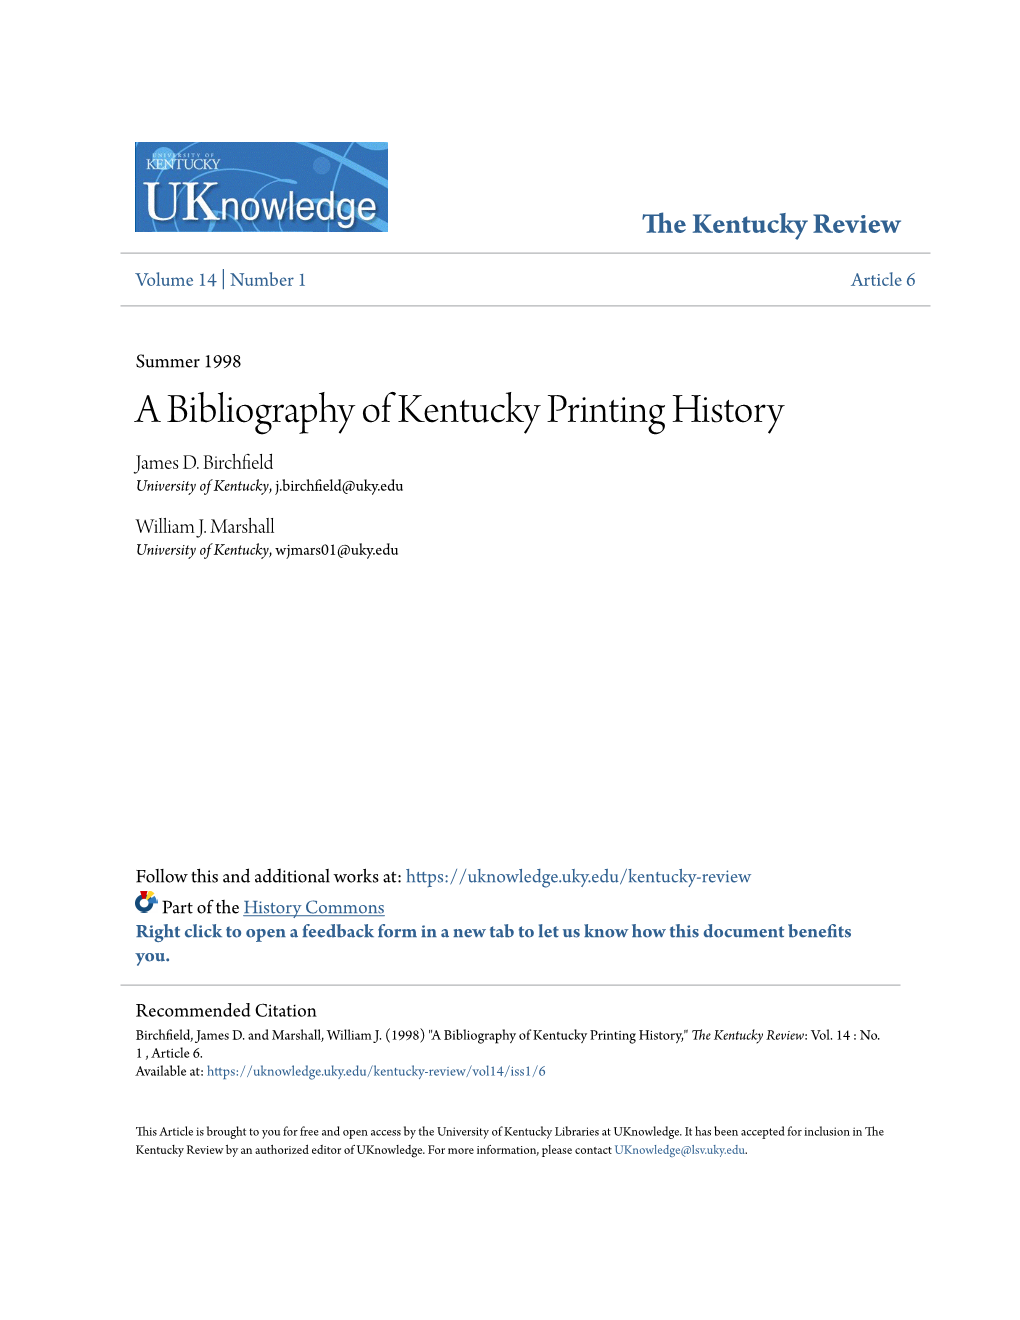 A Bibliography of Kentucky Printing History James D